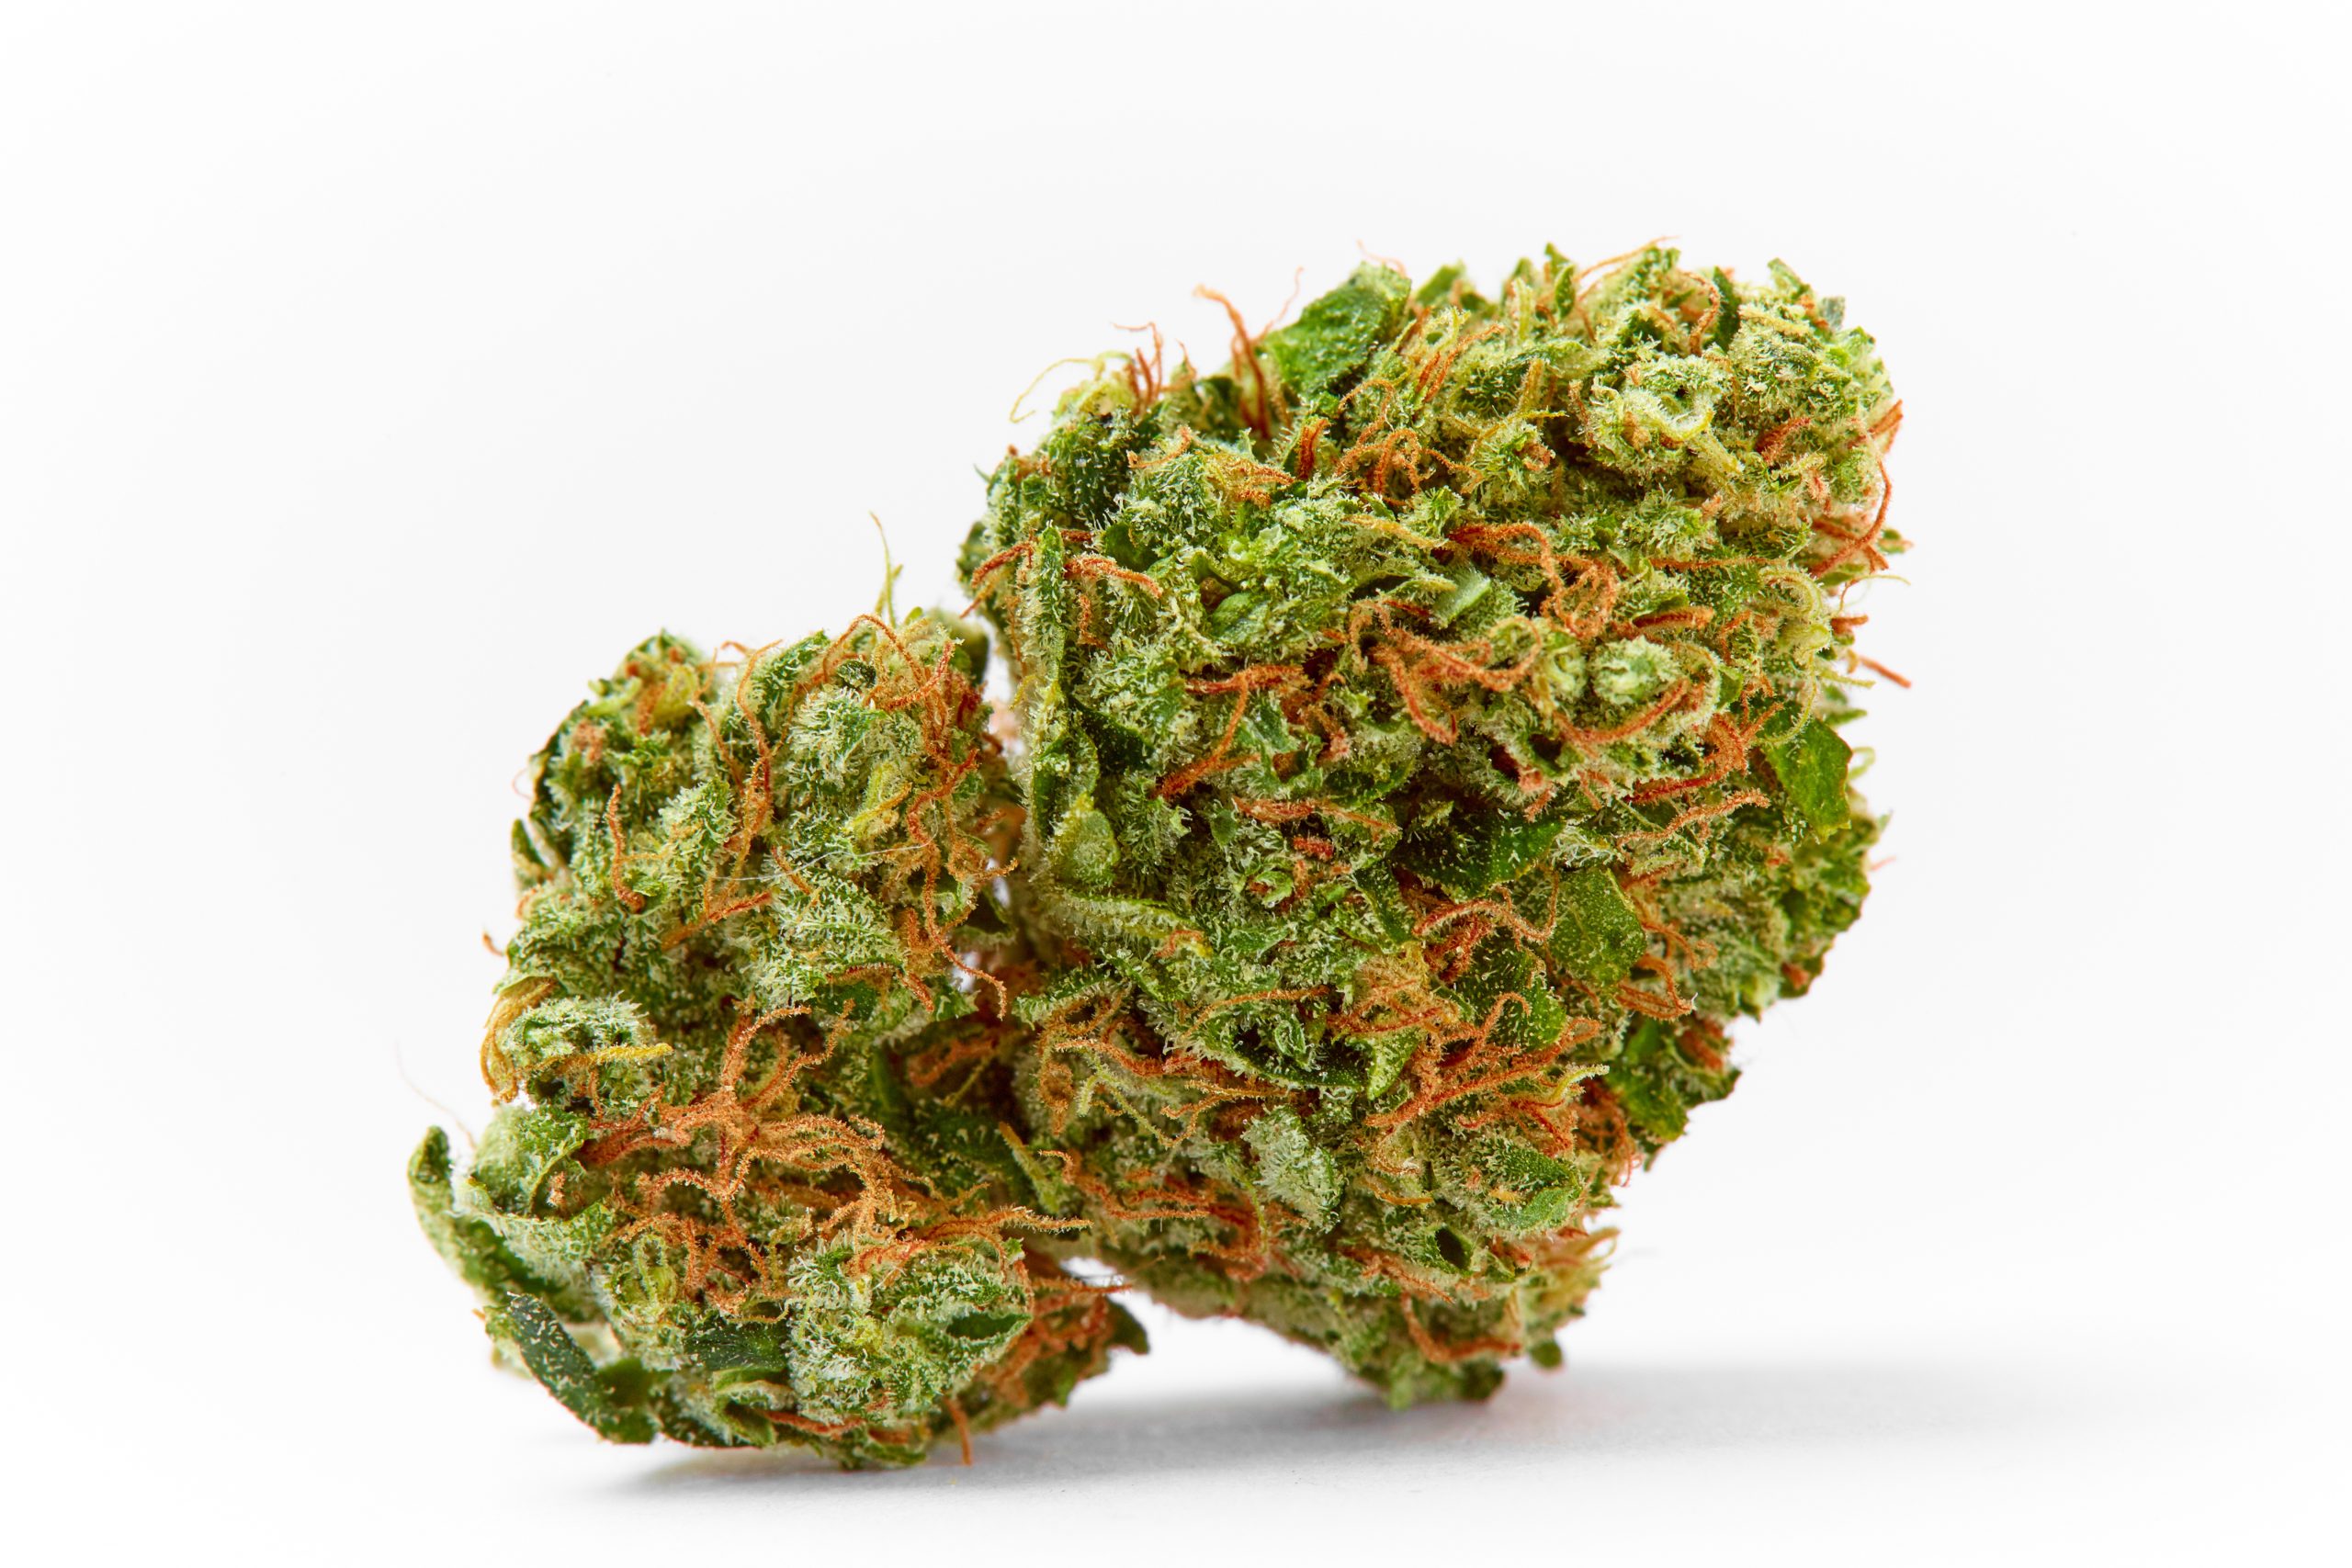 Close up of prescription medical marijuana strain AK47 flower on